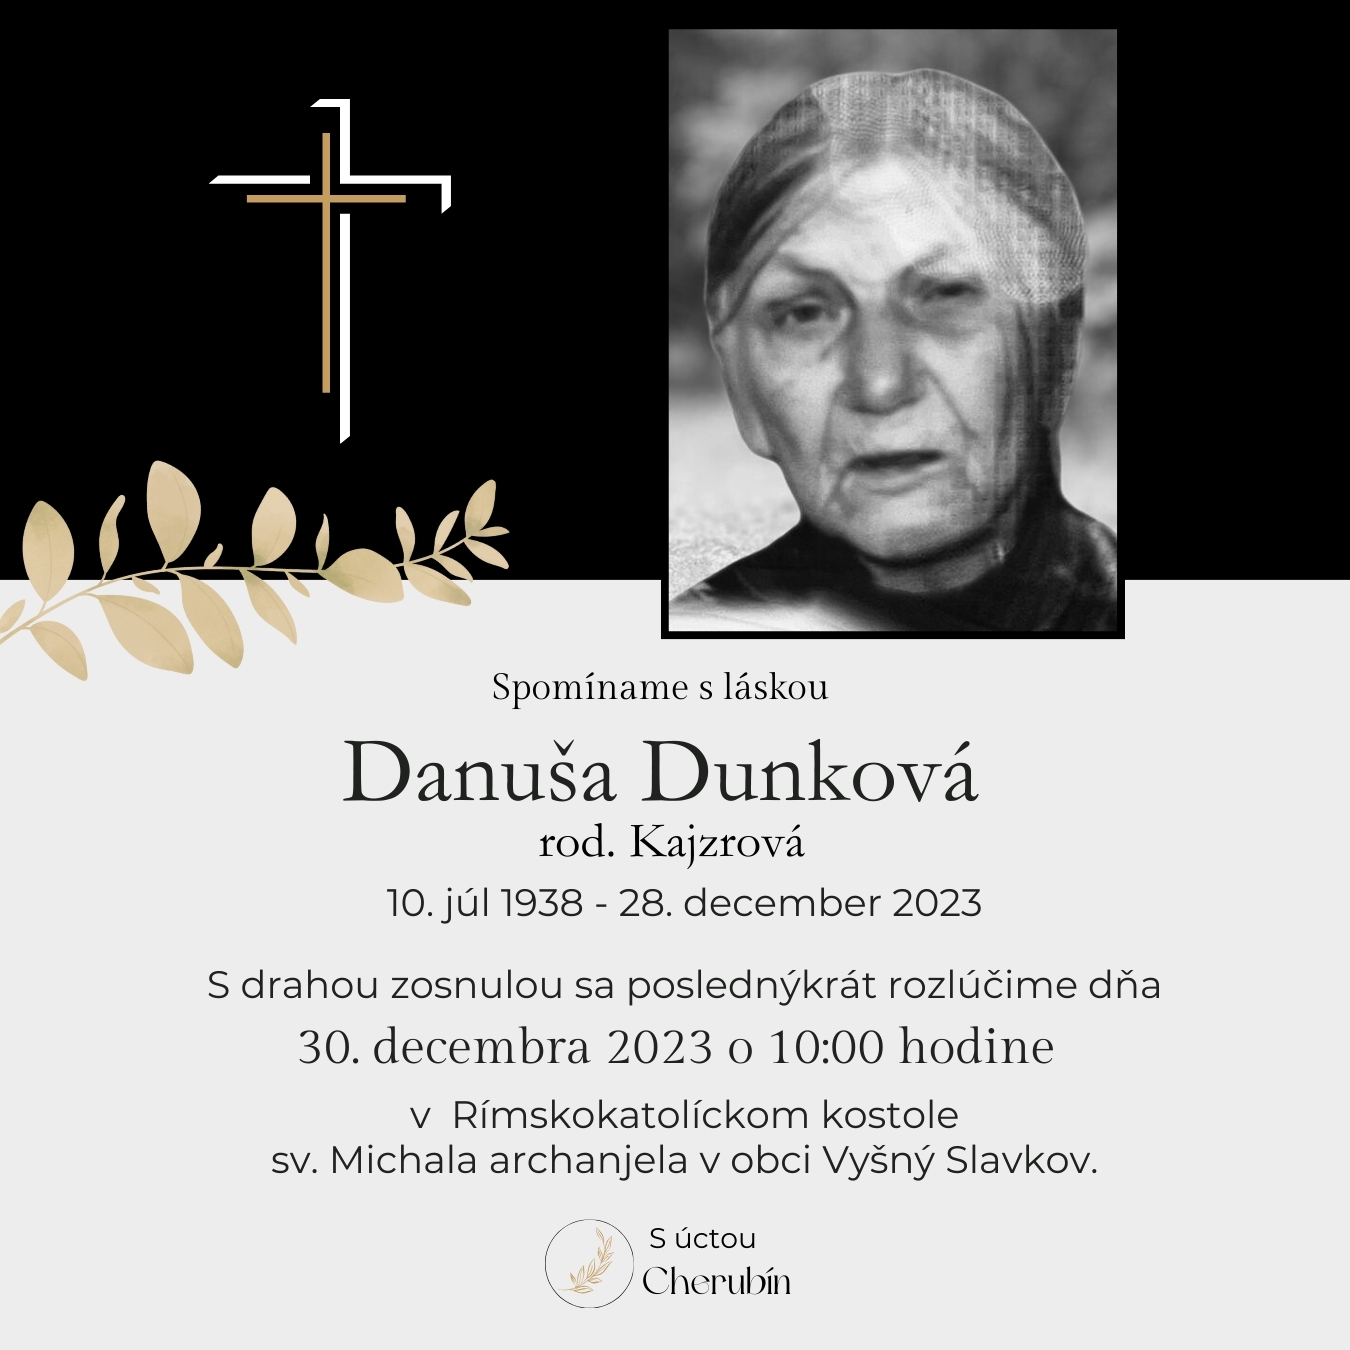 Danuša Dunková